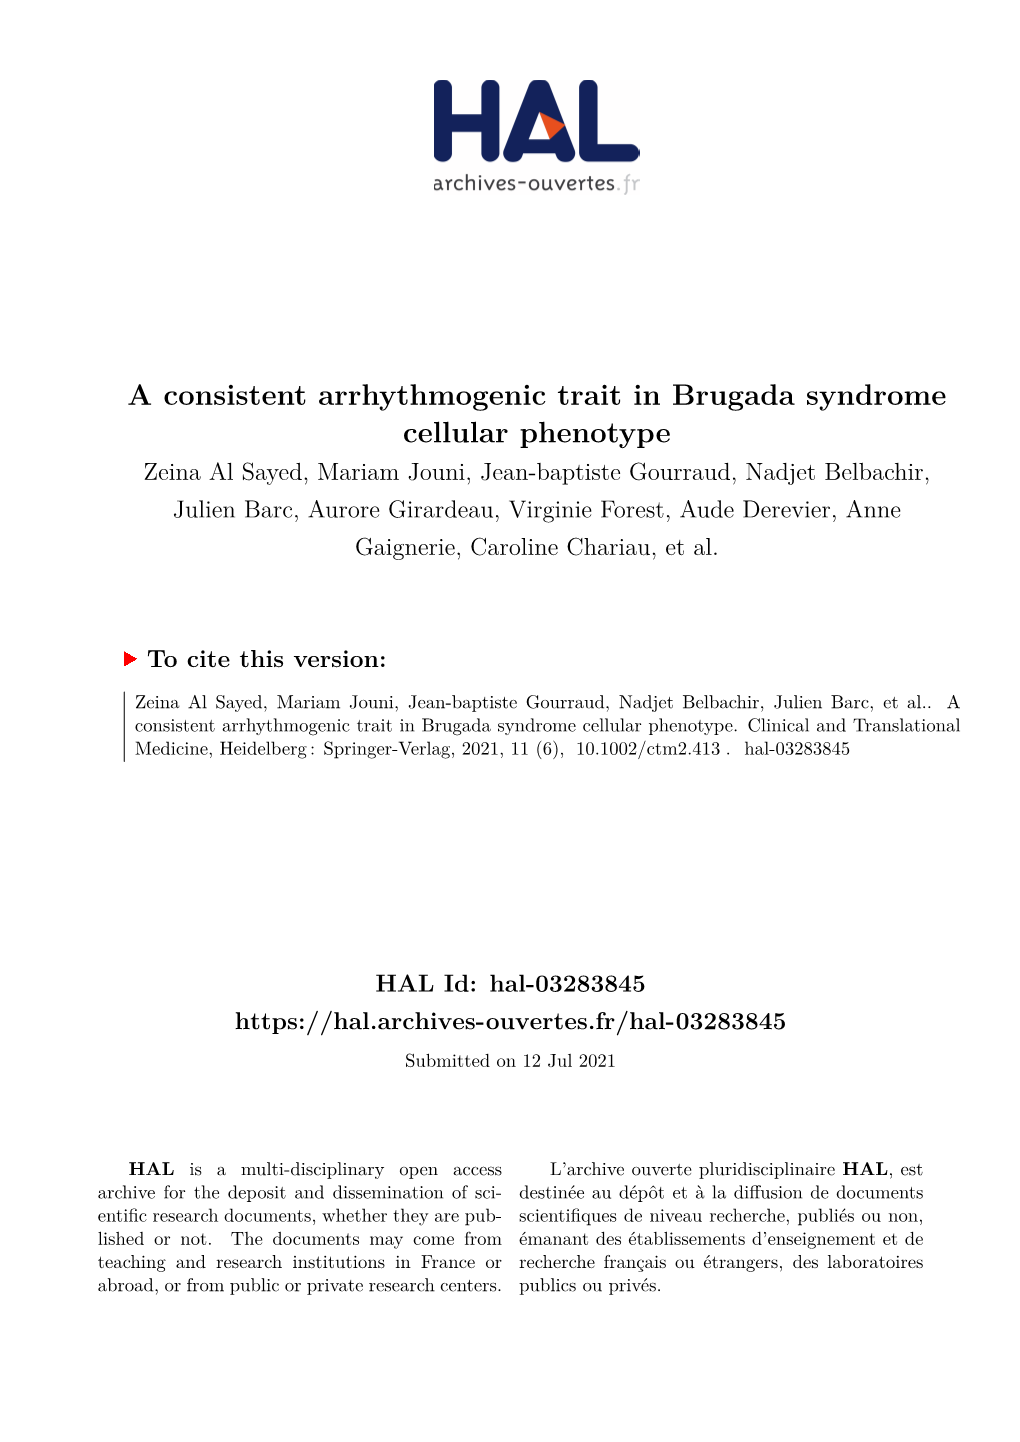 A Consistent Arrhythmogenic Trait in Brugada Syndrome Cellular